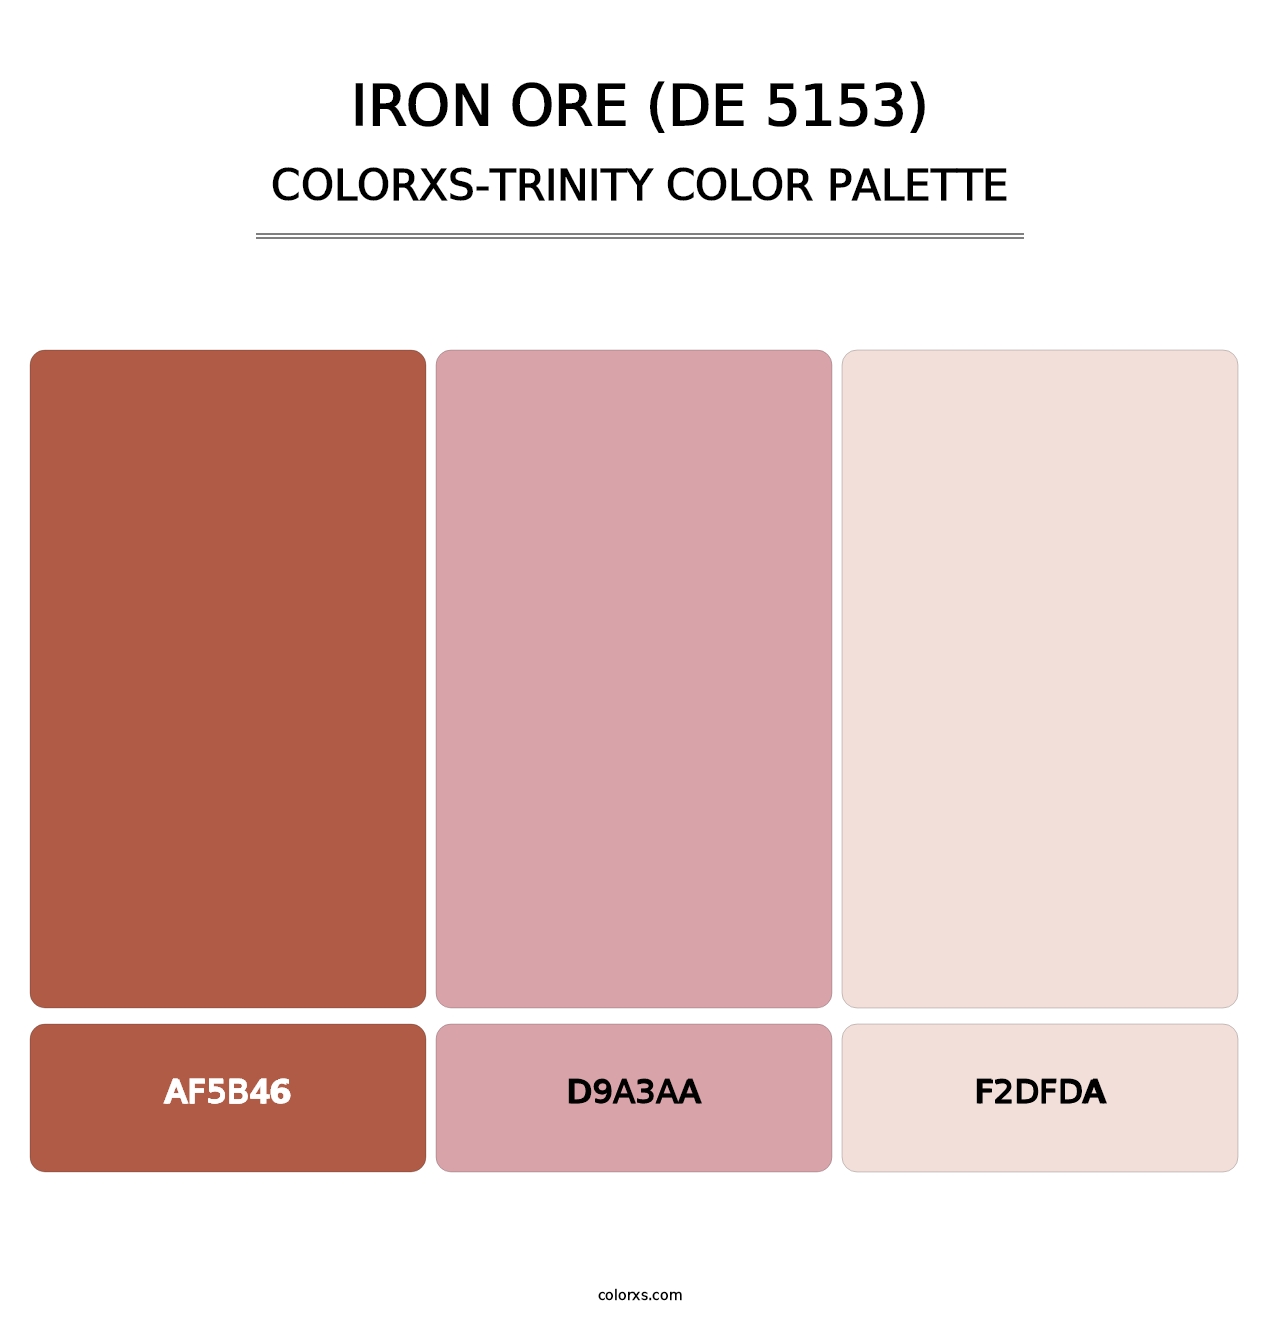 Iron Ore (DE 5153) - Colorxs Trinity Palette